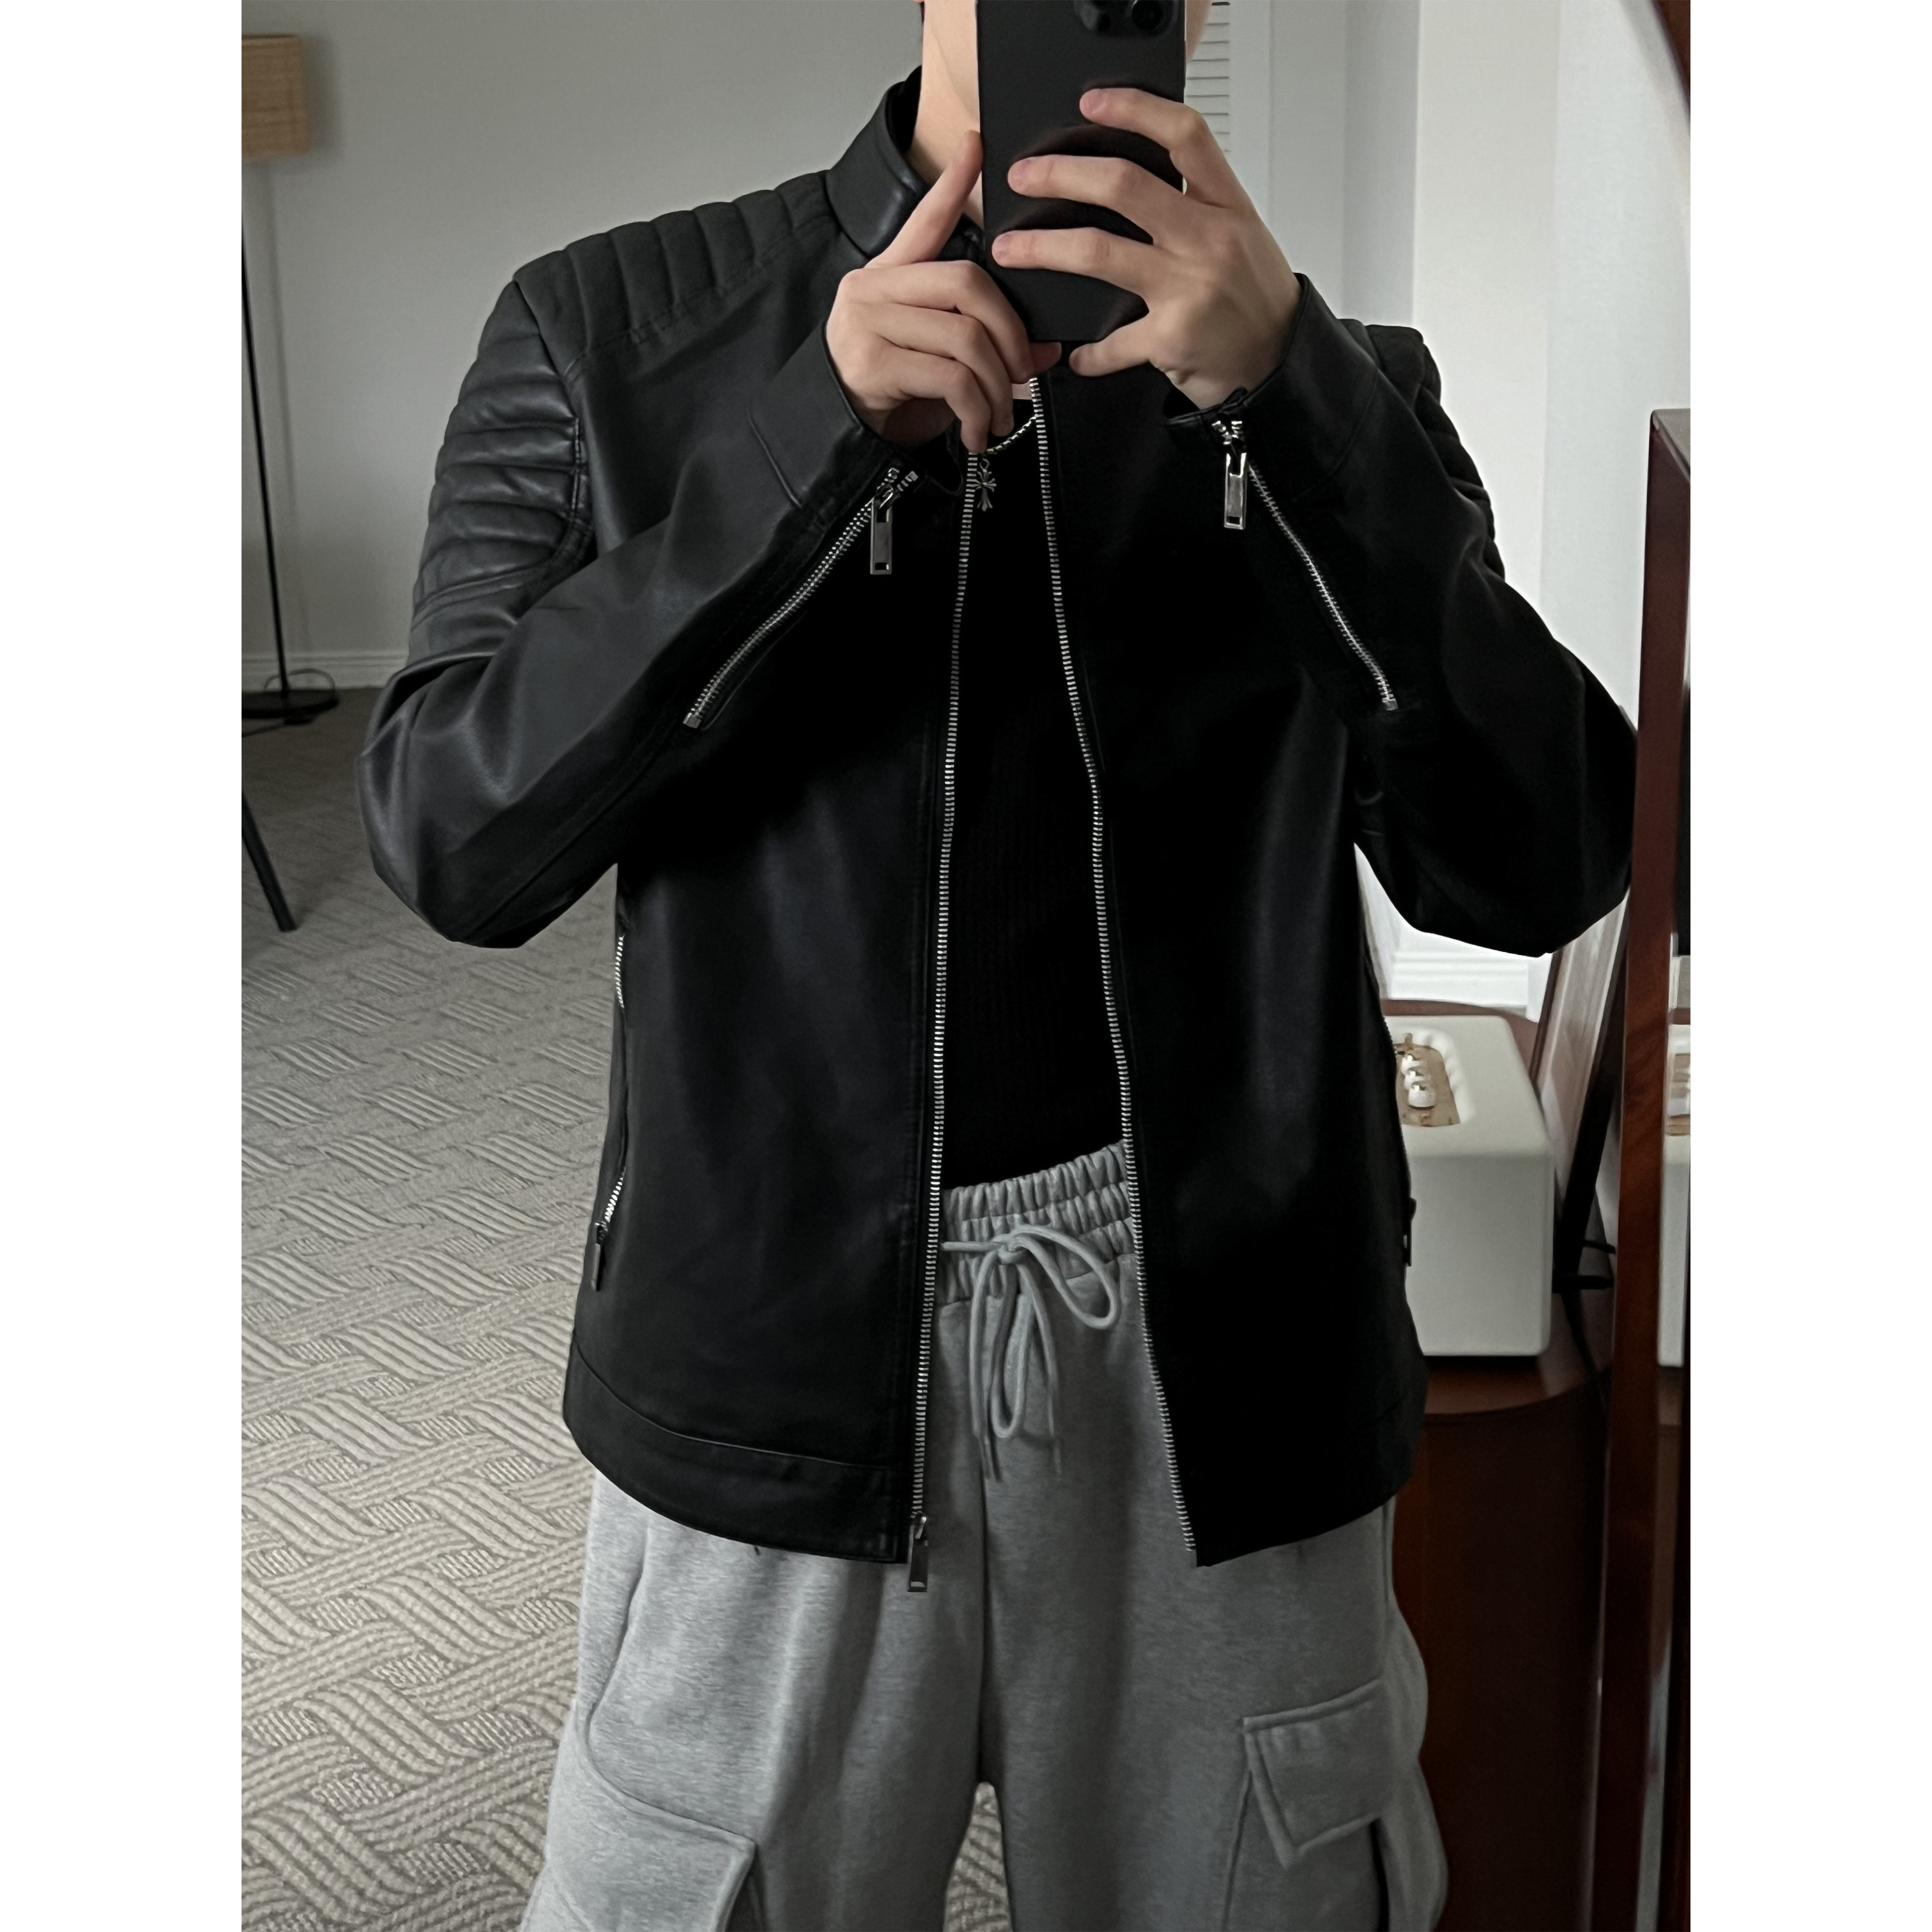 [S/S][엑스라지 품절/ 엠,라지 소량] Rough biker leather jacket(M-XL)